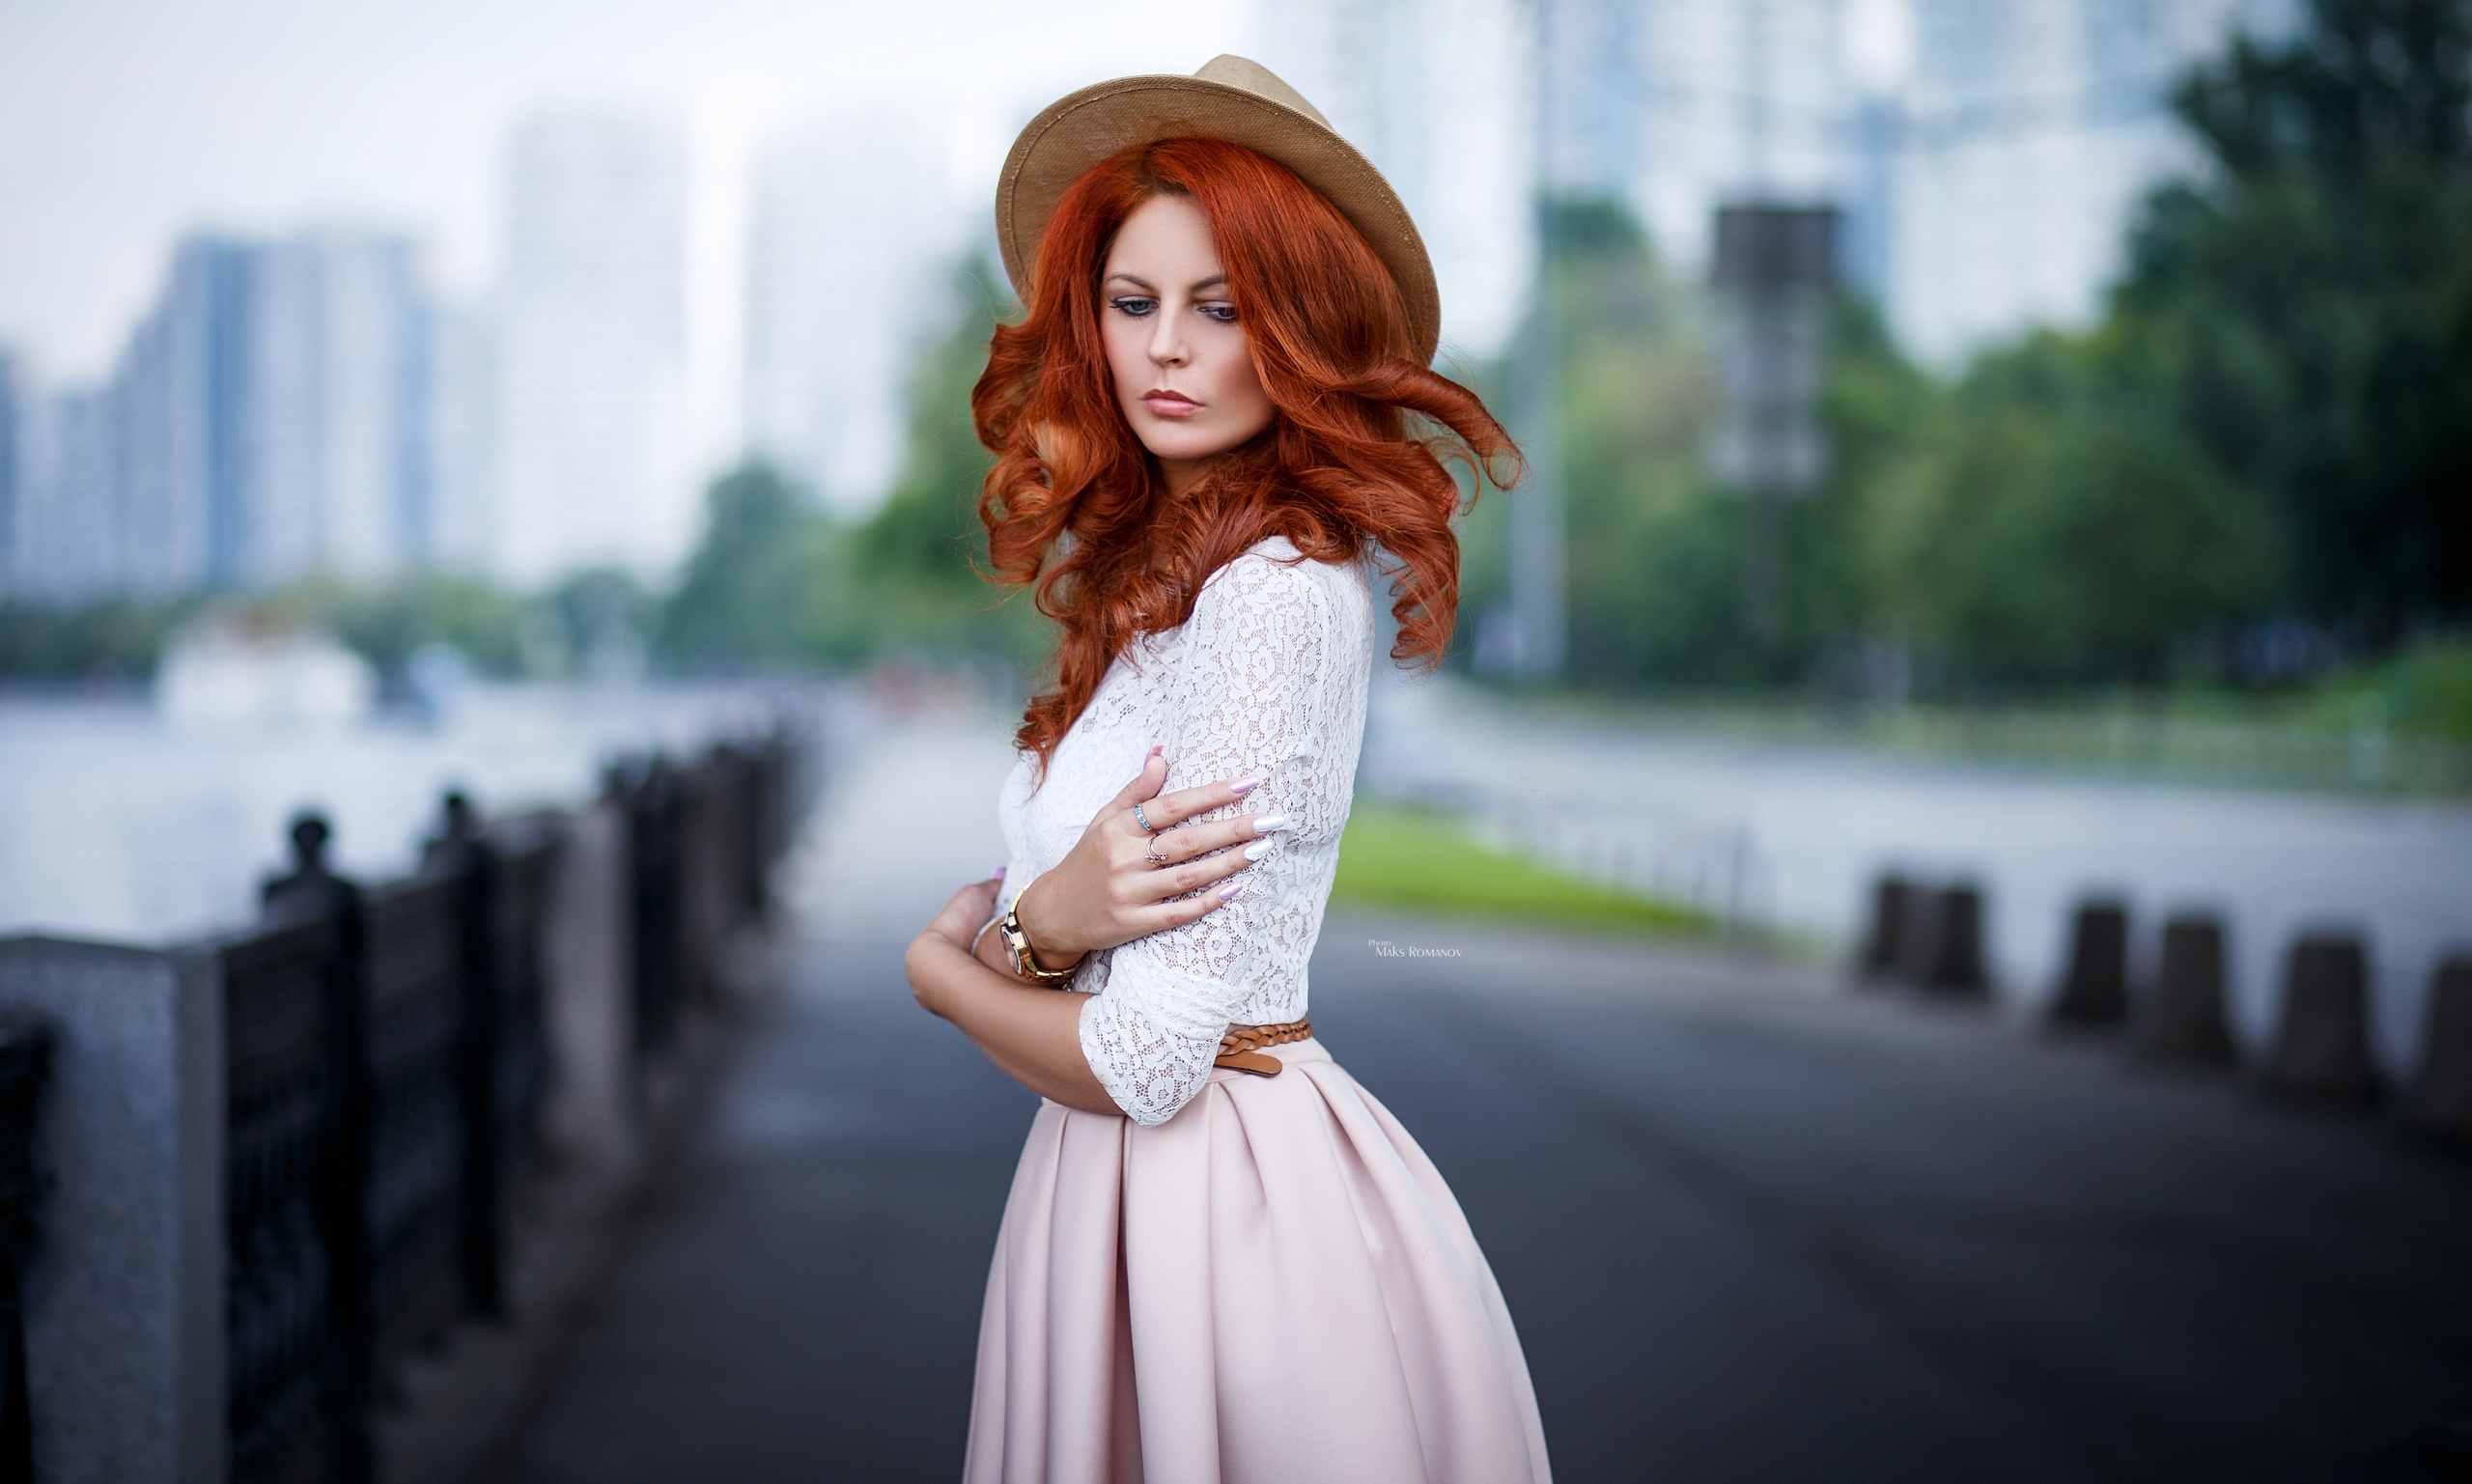 Women Redhead Maksim Romanov Portrait Women Outdoors Hat Arms Crossed Long Hair White Tops Lace Top  2560x1537